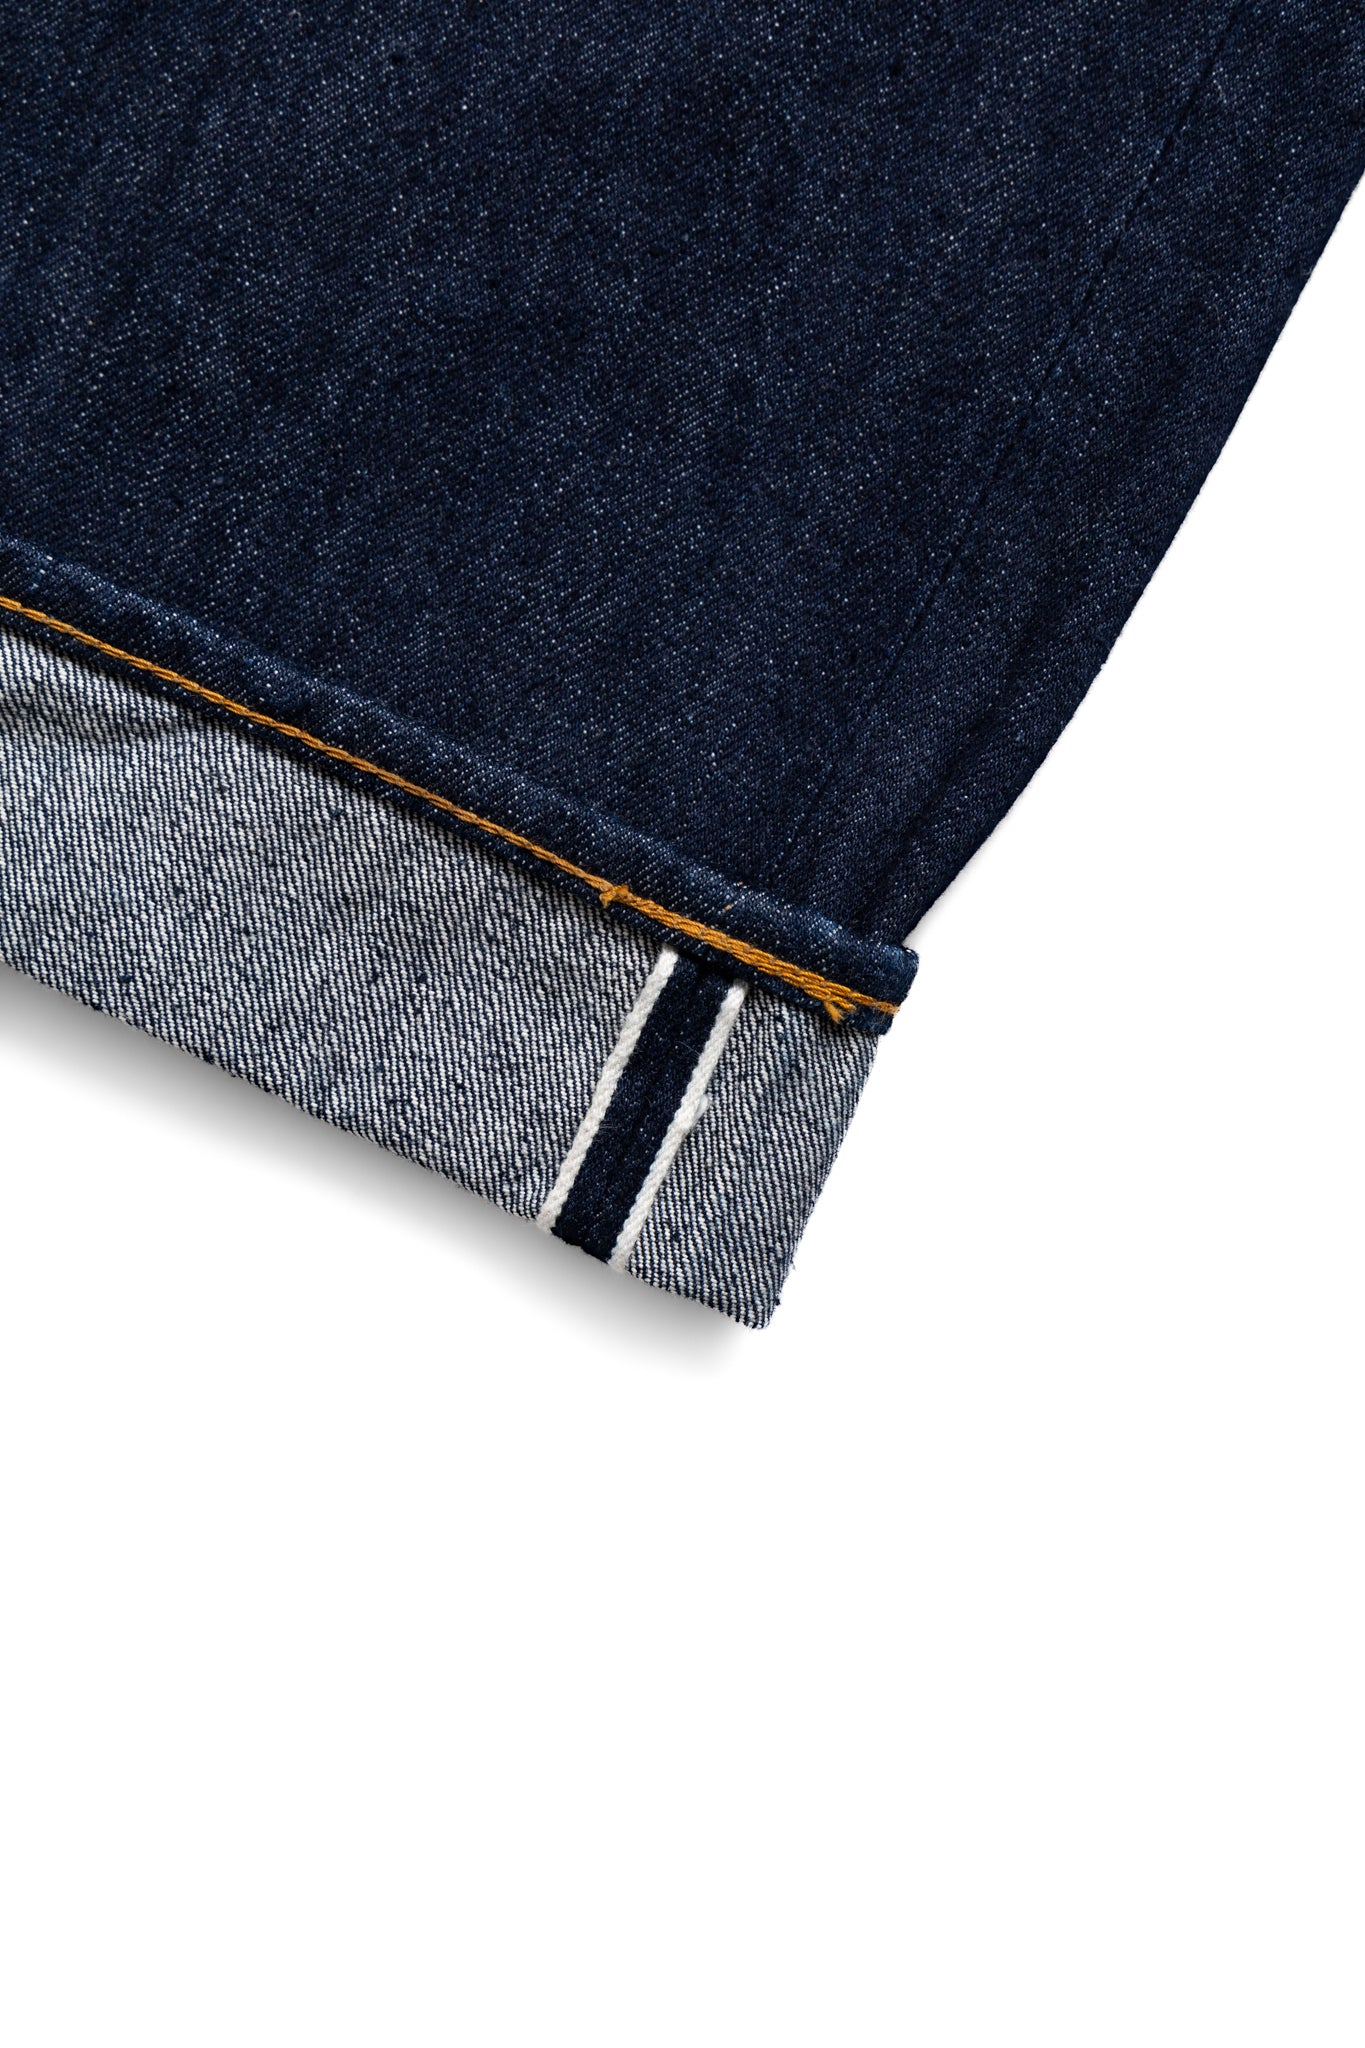 wolsro Backward Jeans